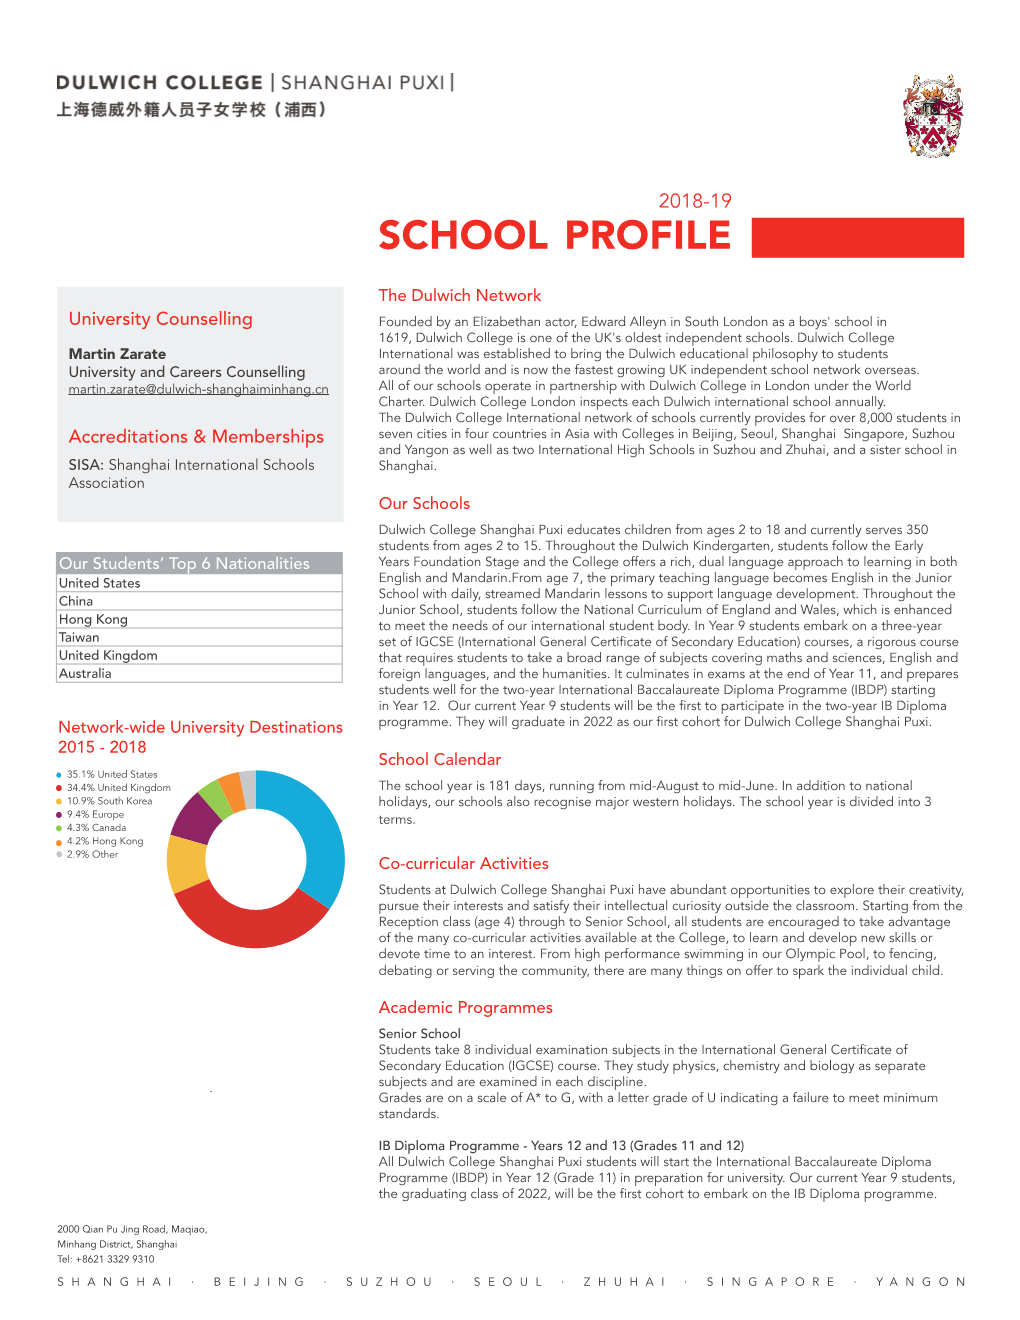 2018 DCSPX School Profile.Pdf